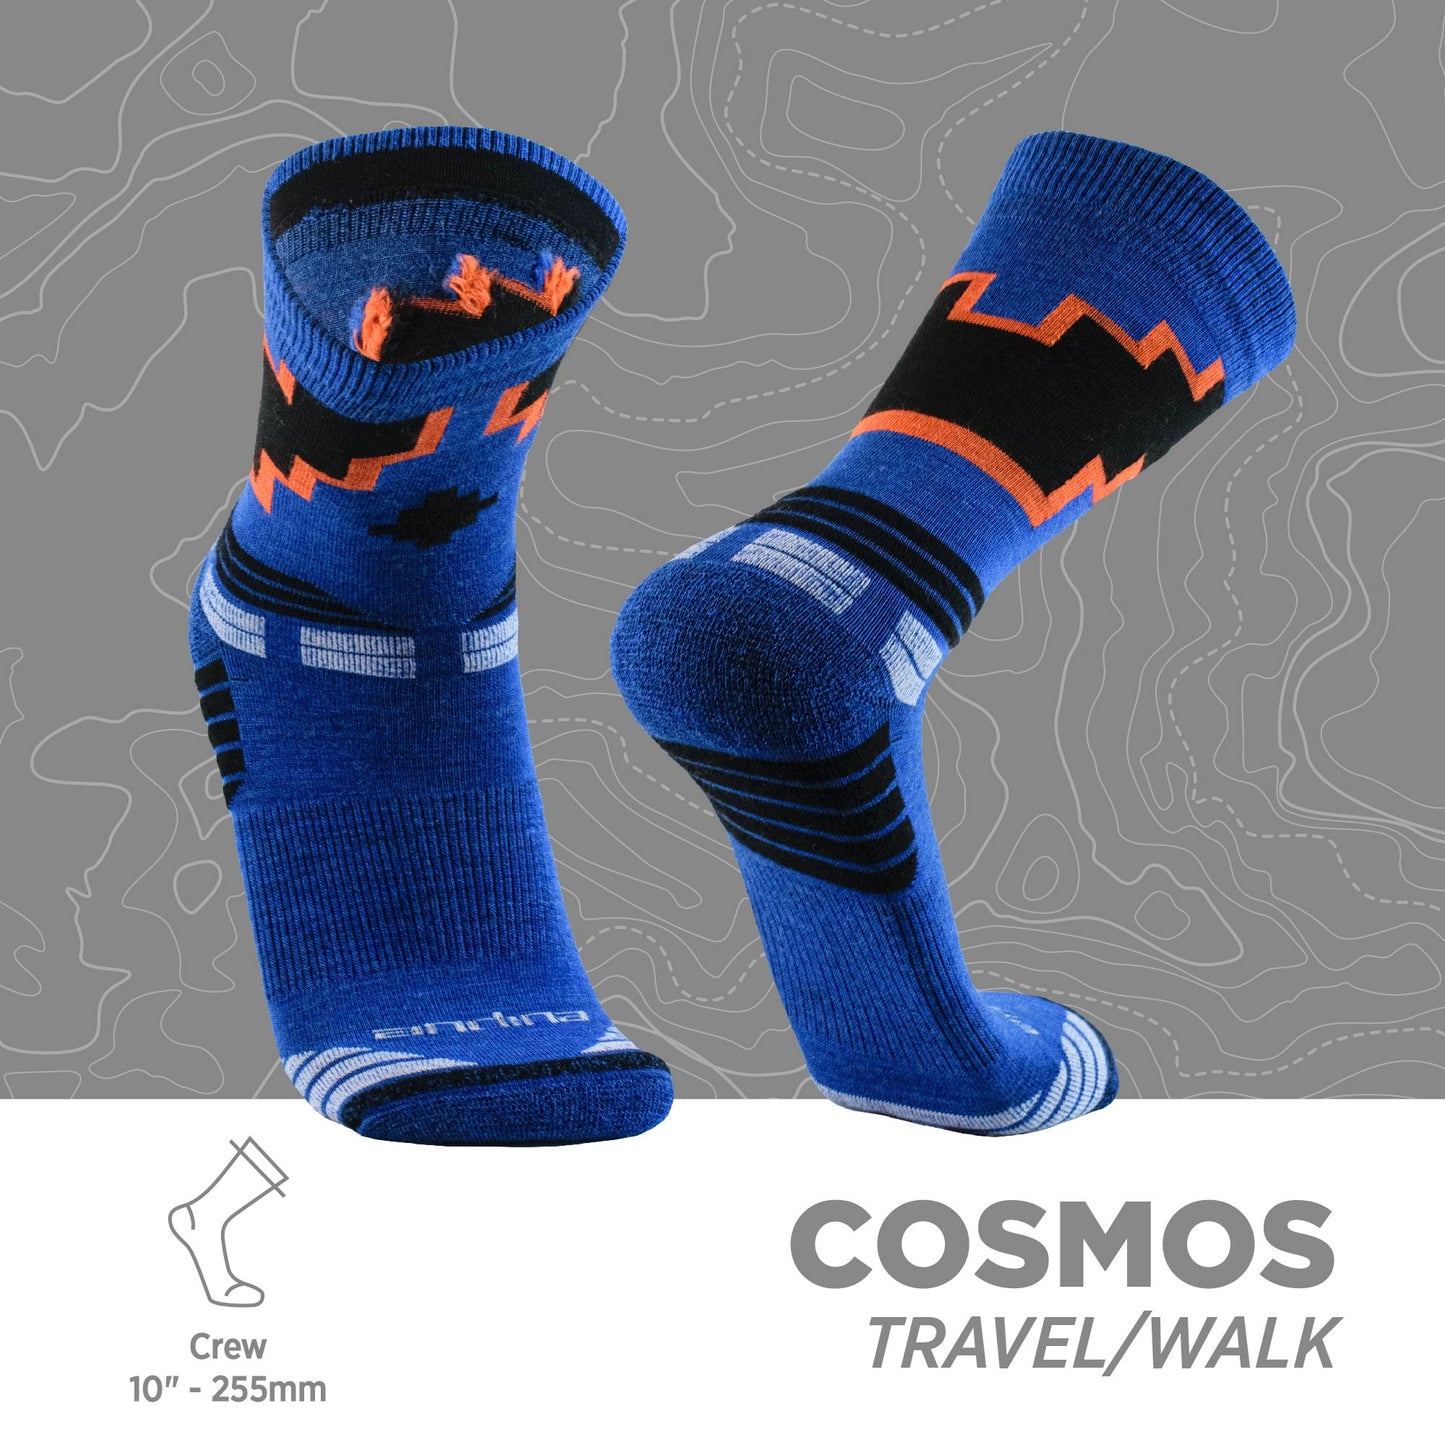 Cosmos | Travel & Walk